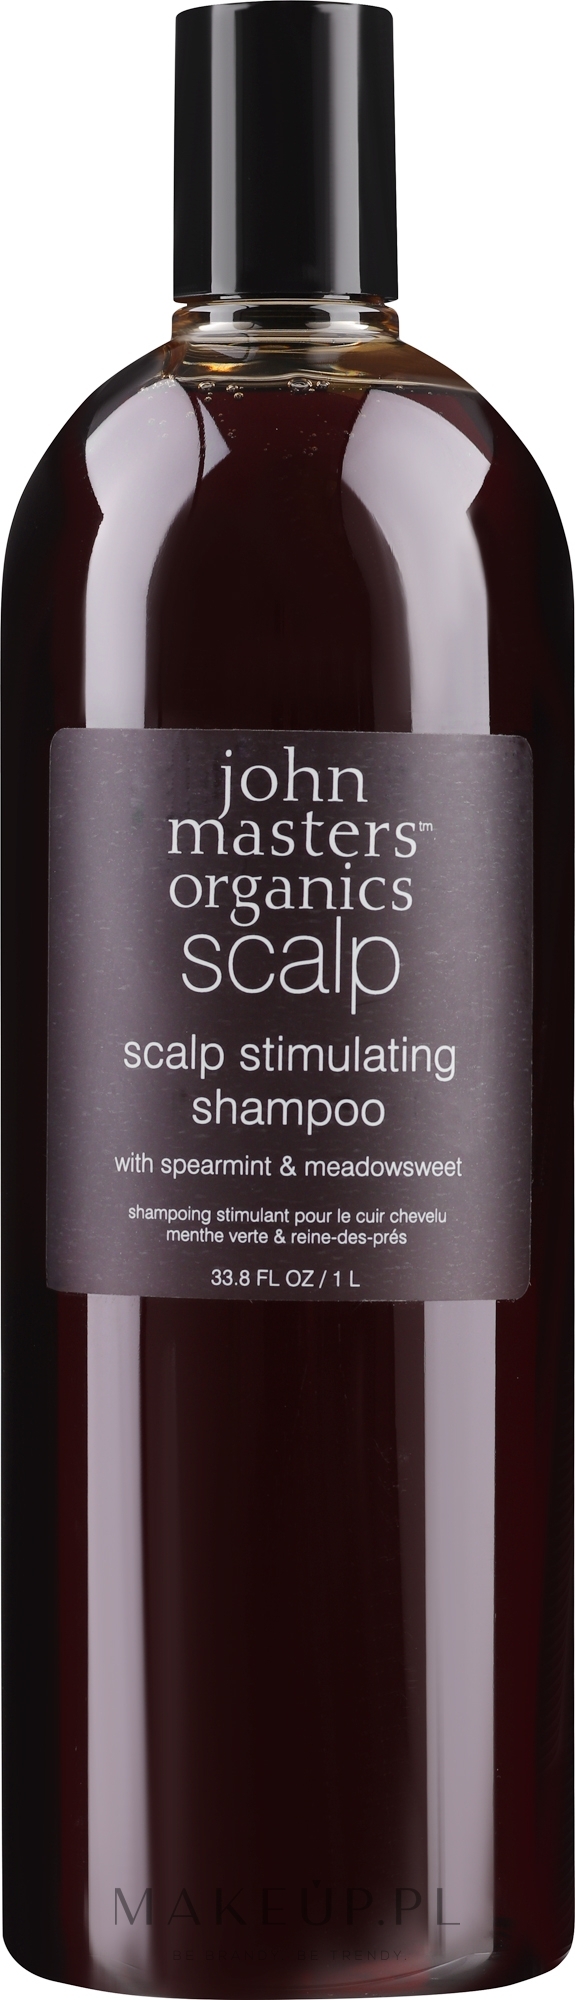 john masters organics scalp szampon opinie